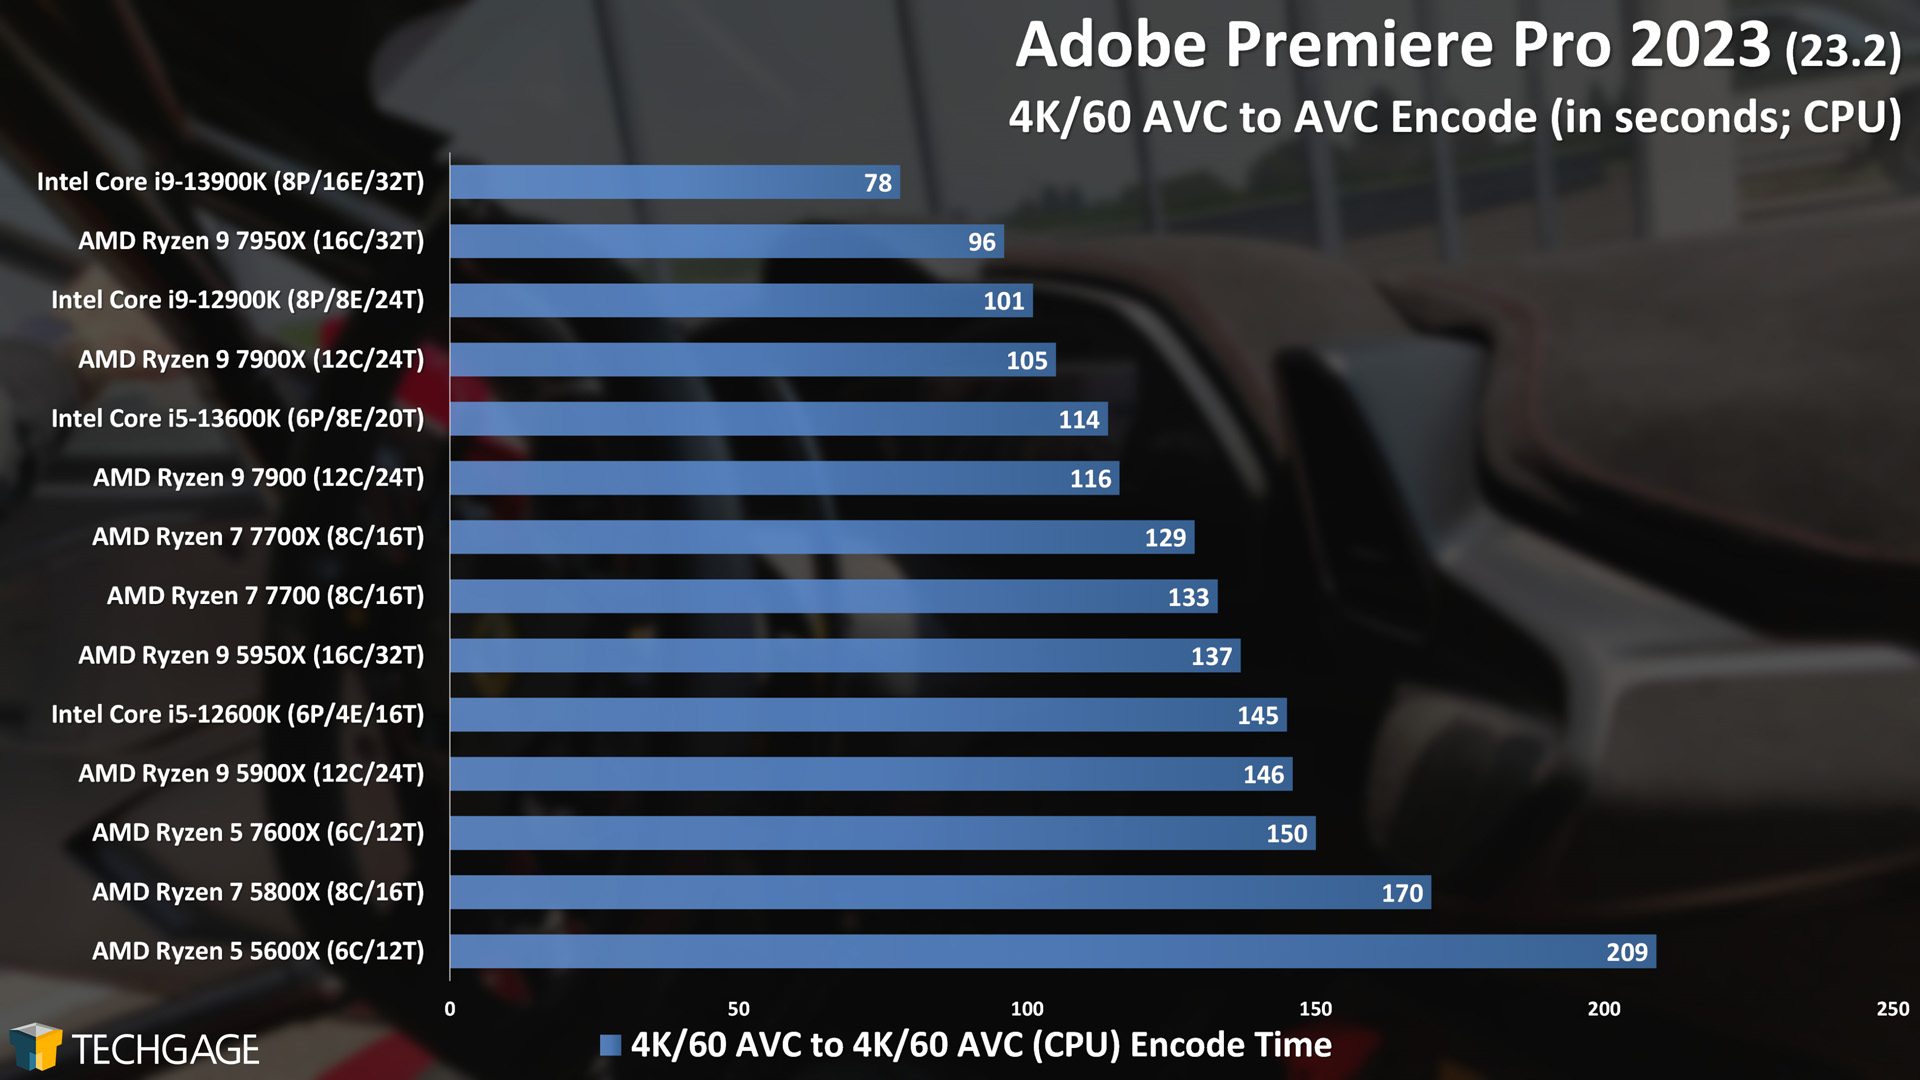 Adobe Premiere Pro - CPU Encoding Performance (4K60 AVC to AVC)